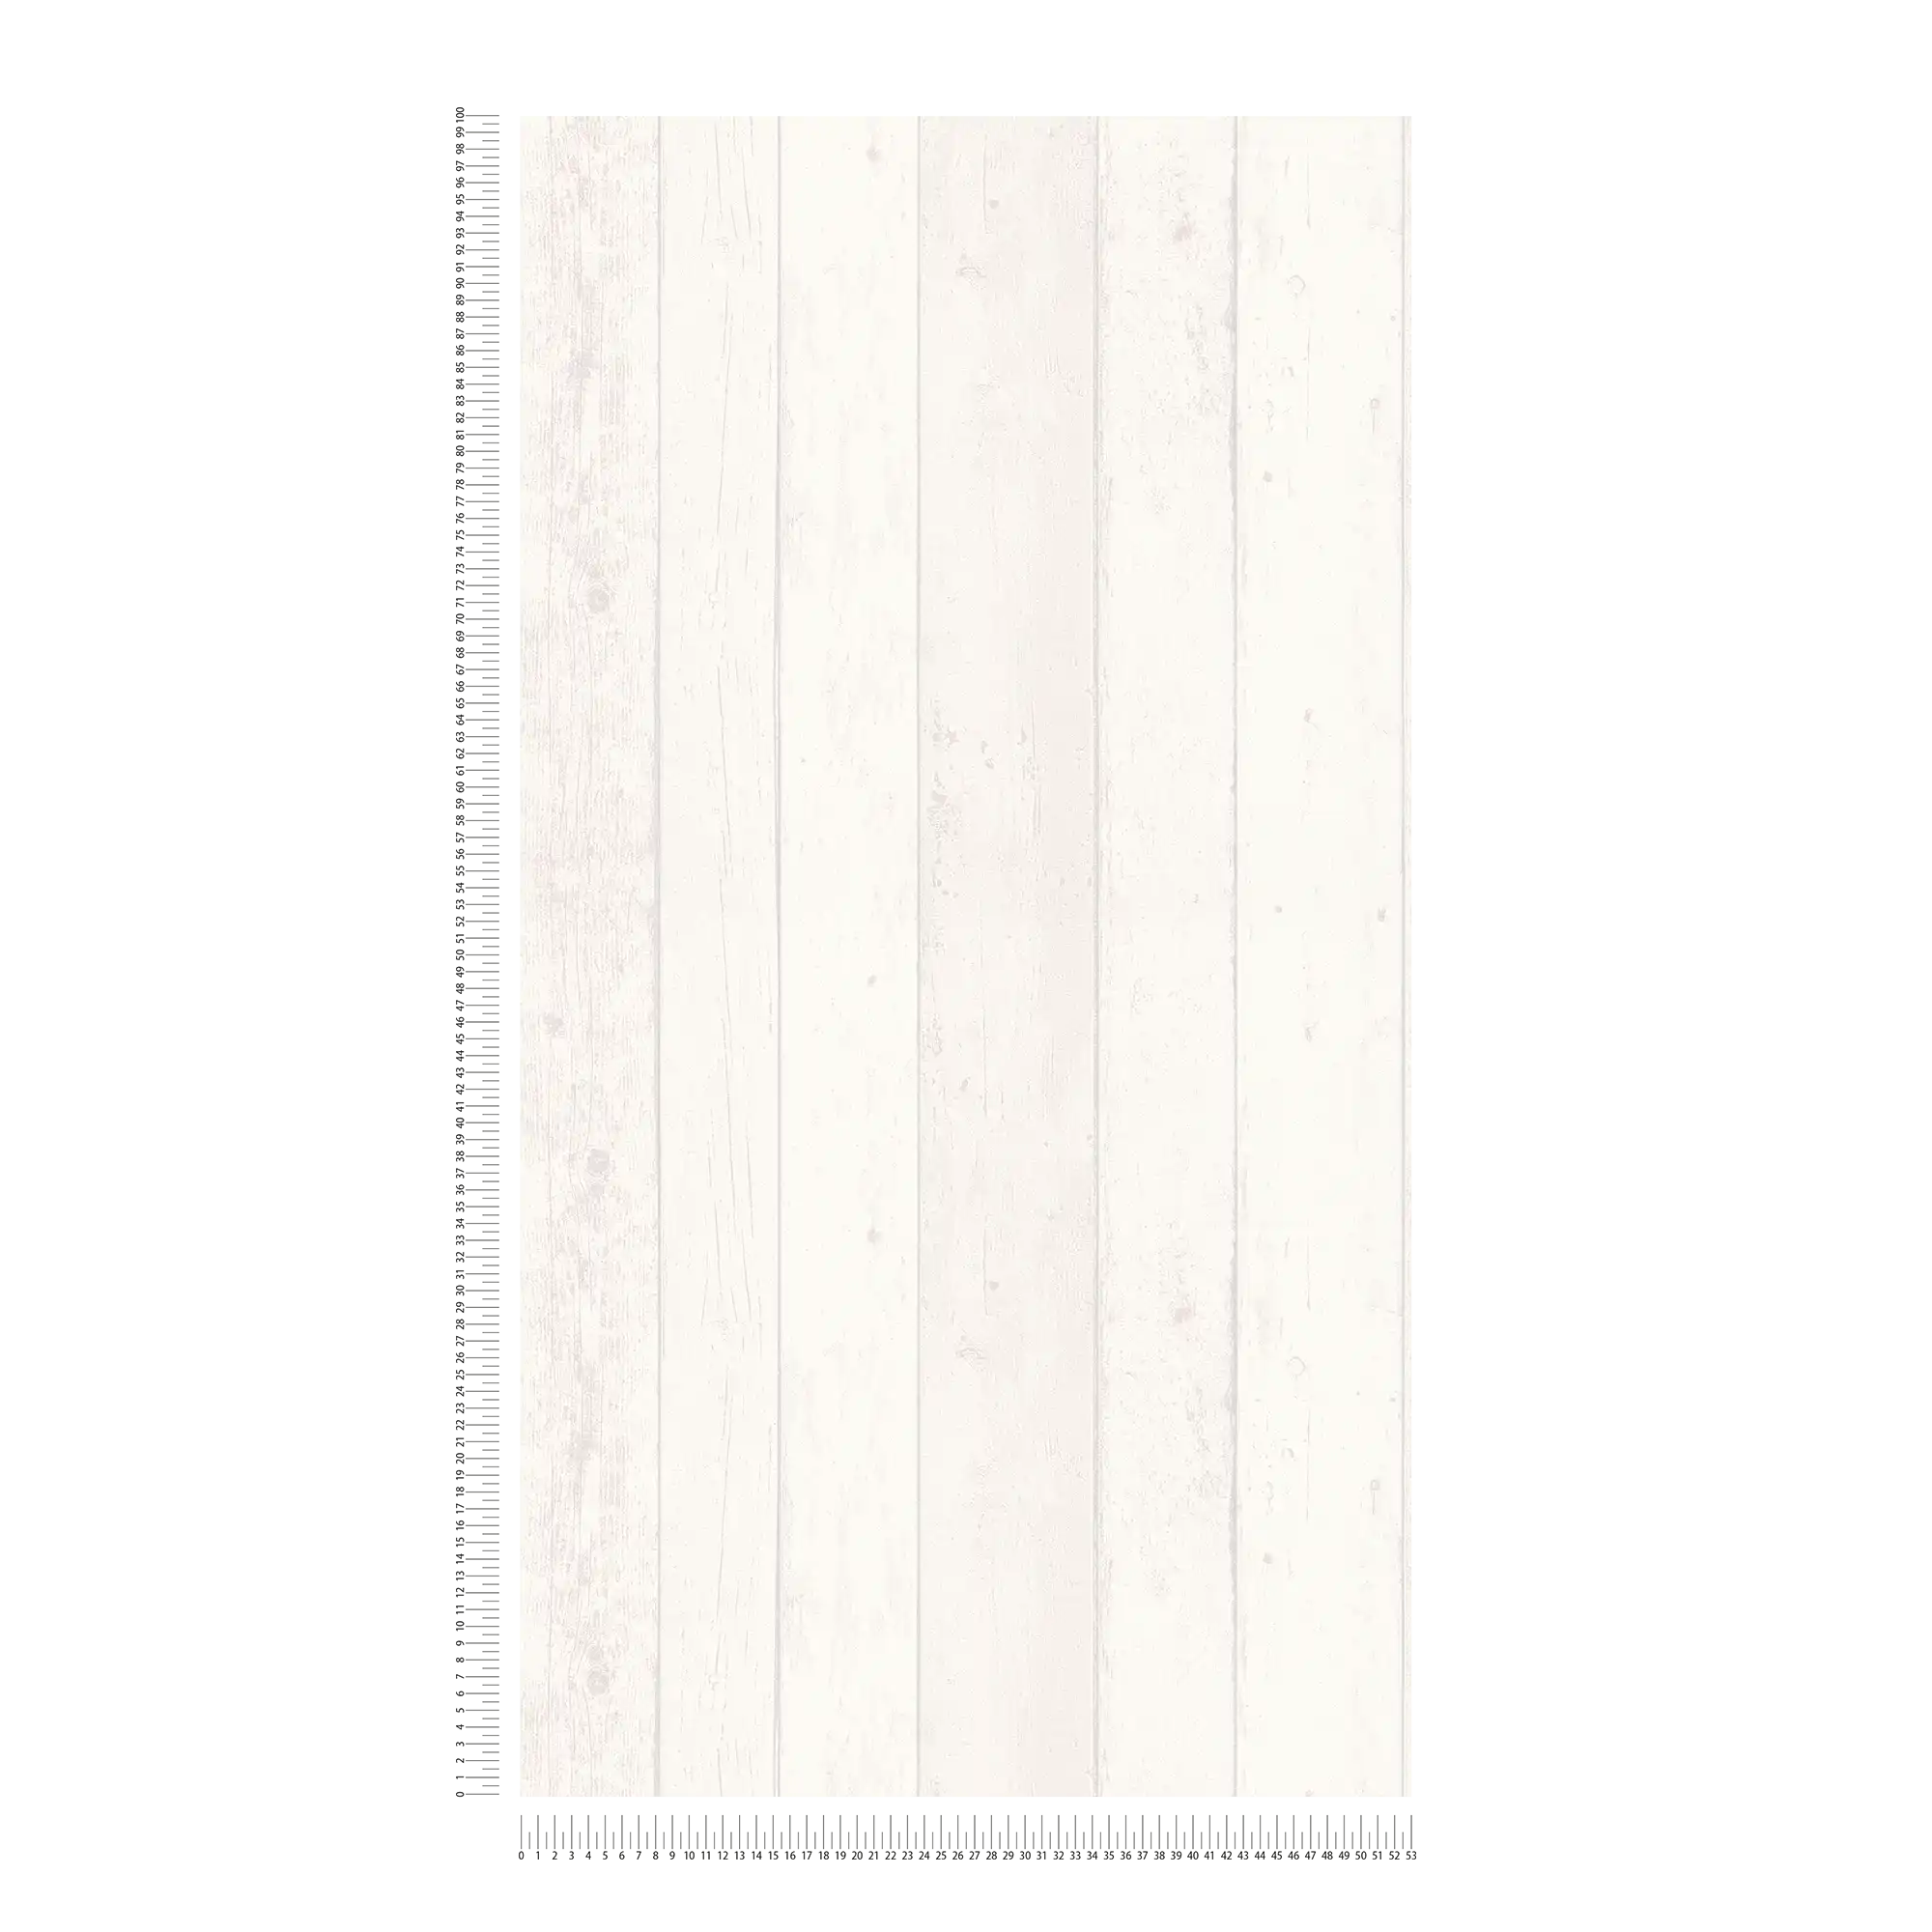             Papel pintado efecto madera con veta en estilo Shabby Chic - blanco, gris
        